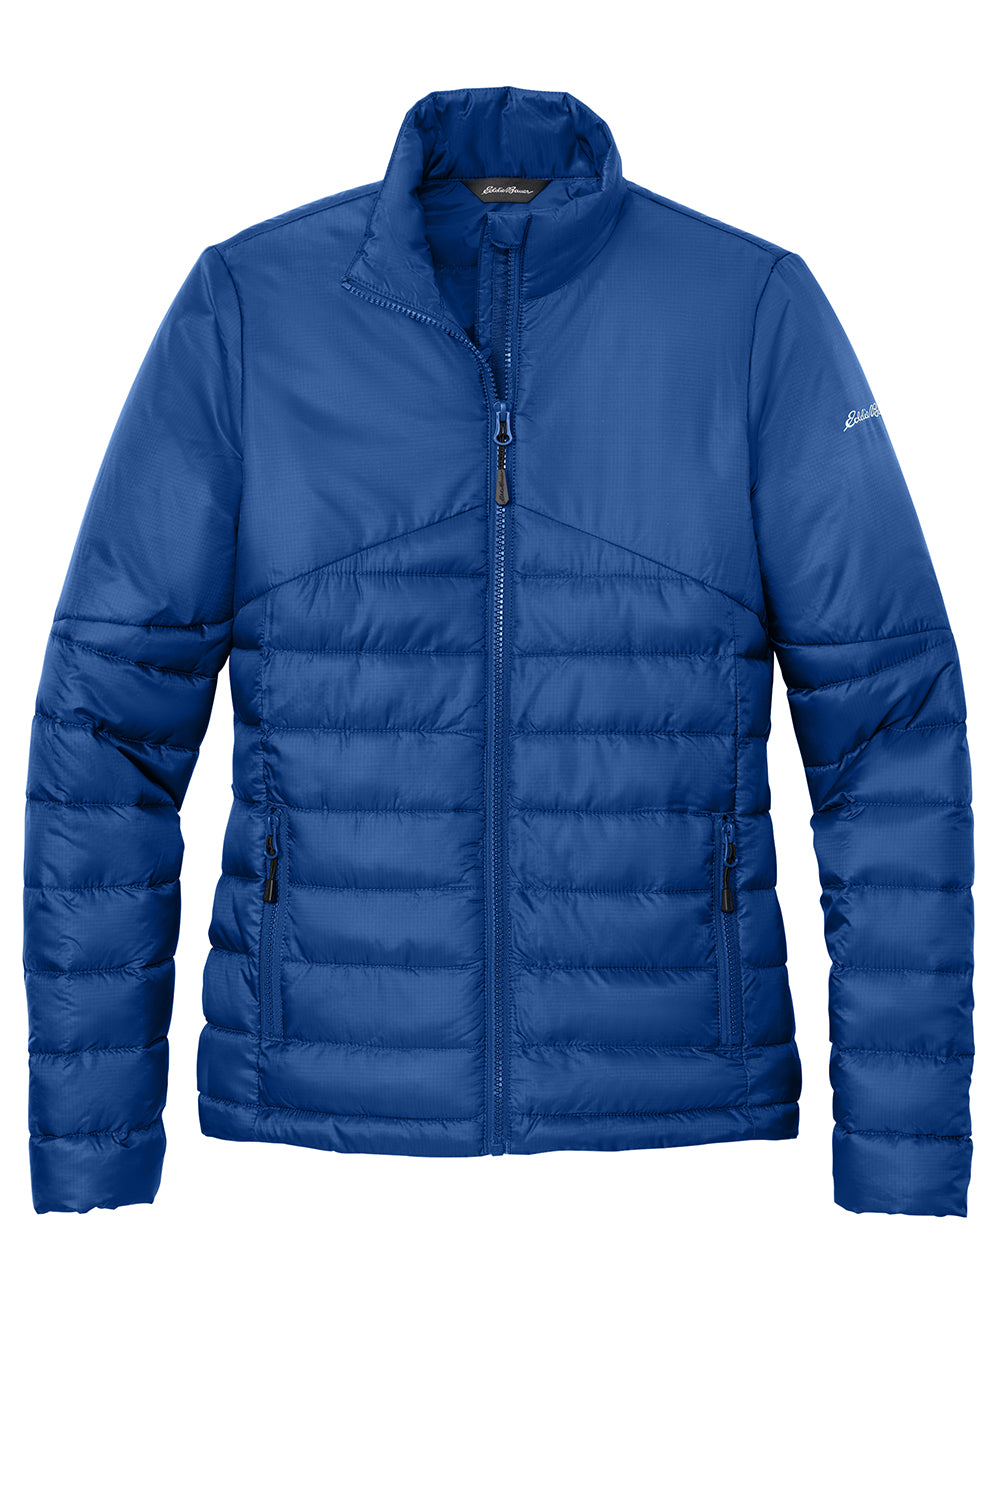 Eddie Bauer EB511 Womens Water Resistant Quilted Full Zip Jacket Cobalt Blue Flat Front